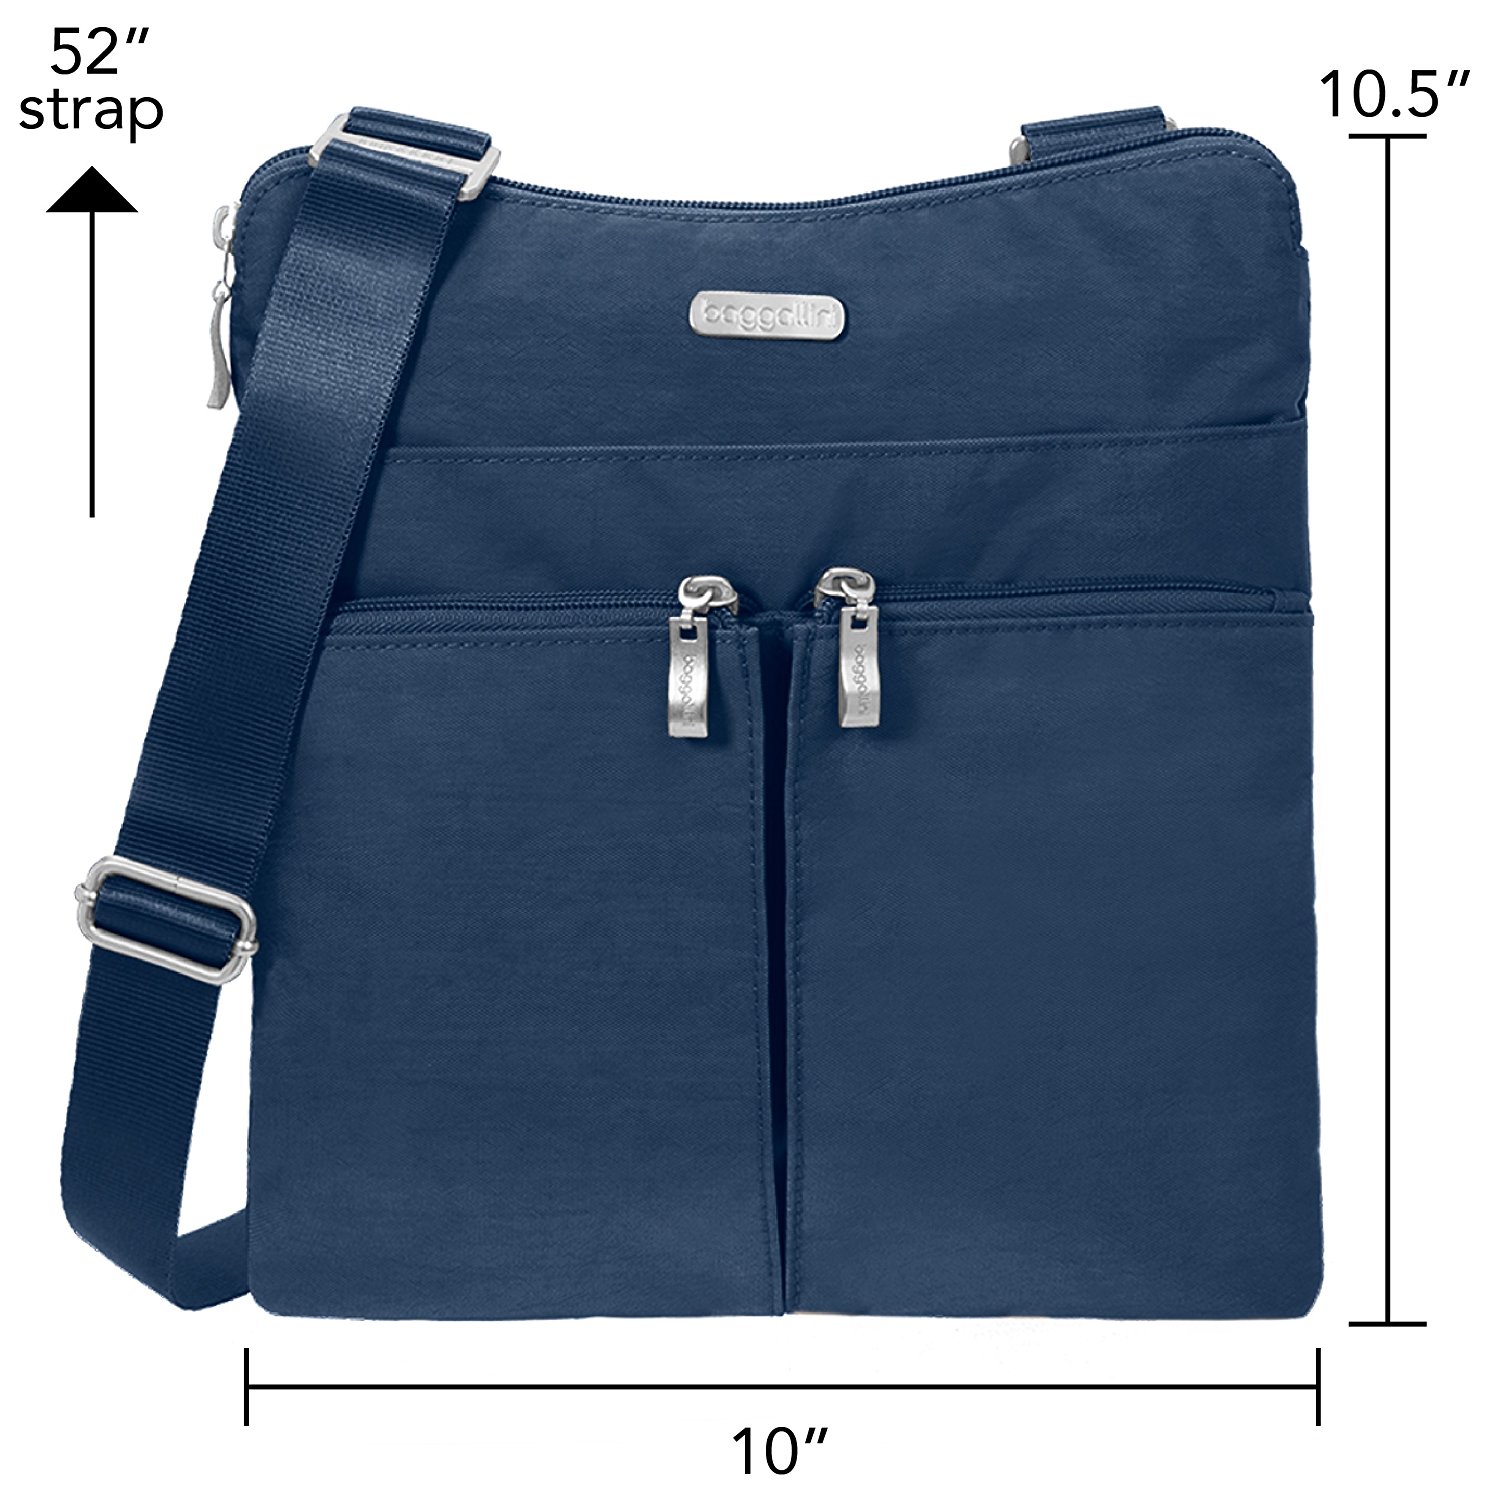 Baggallini Horizon Lightweight Crossbody Bag Multi-Pocketed Travel Purse | eBay